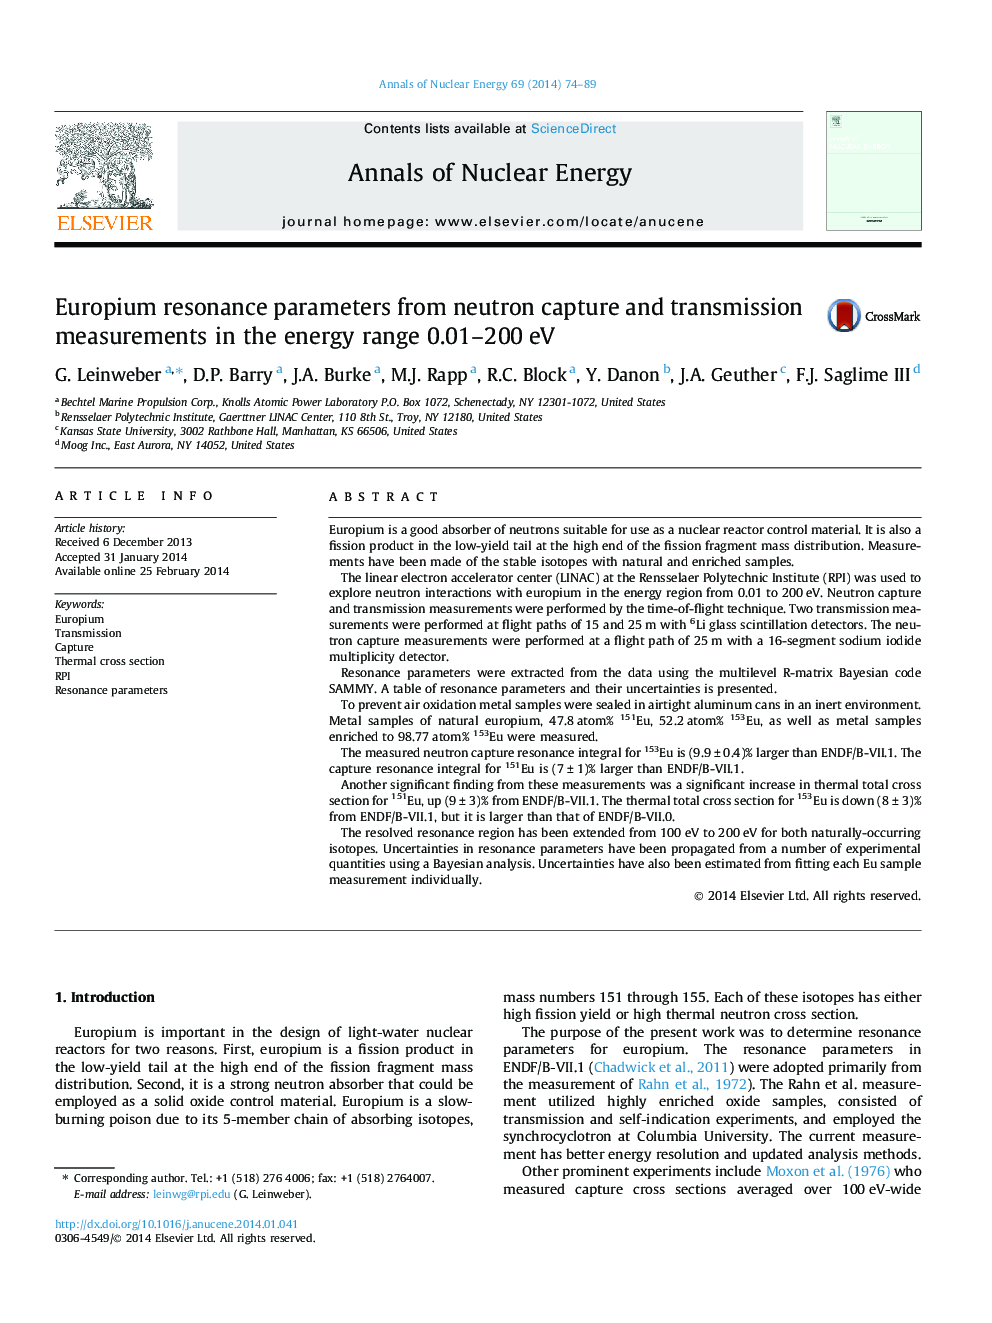 Europium resonance parameters from neutron capture and transmission measurements in the energy range 0.01-200Â eV